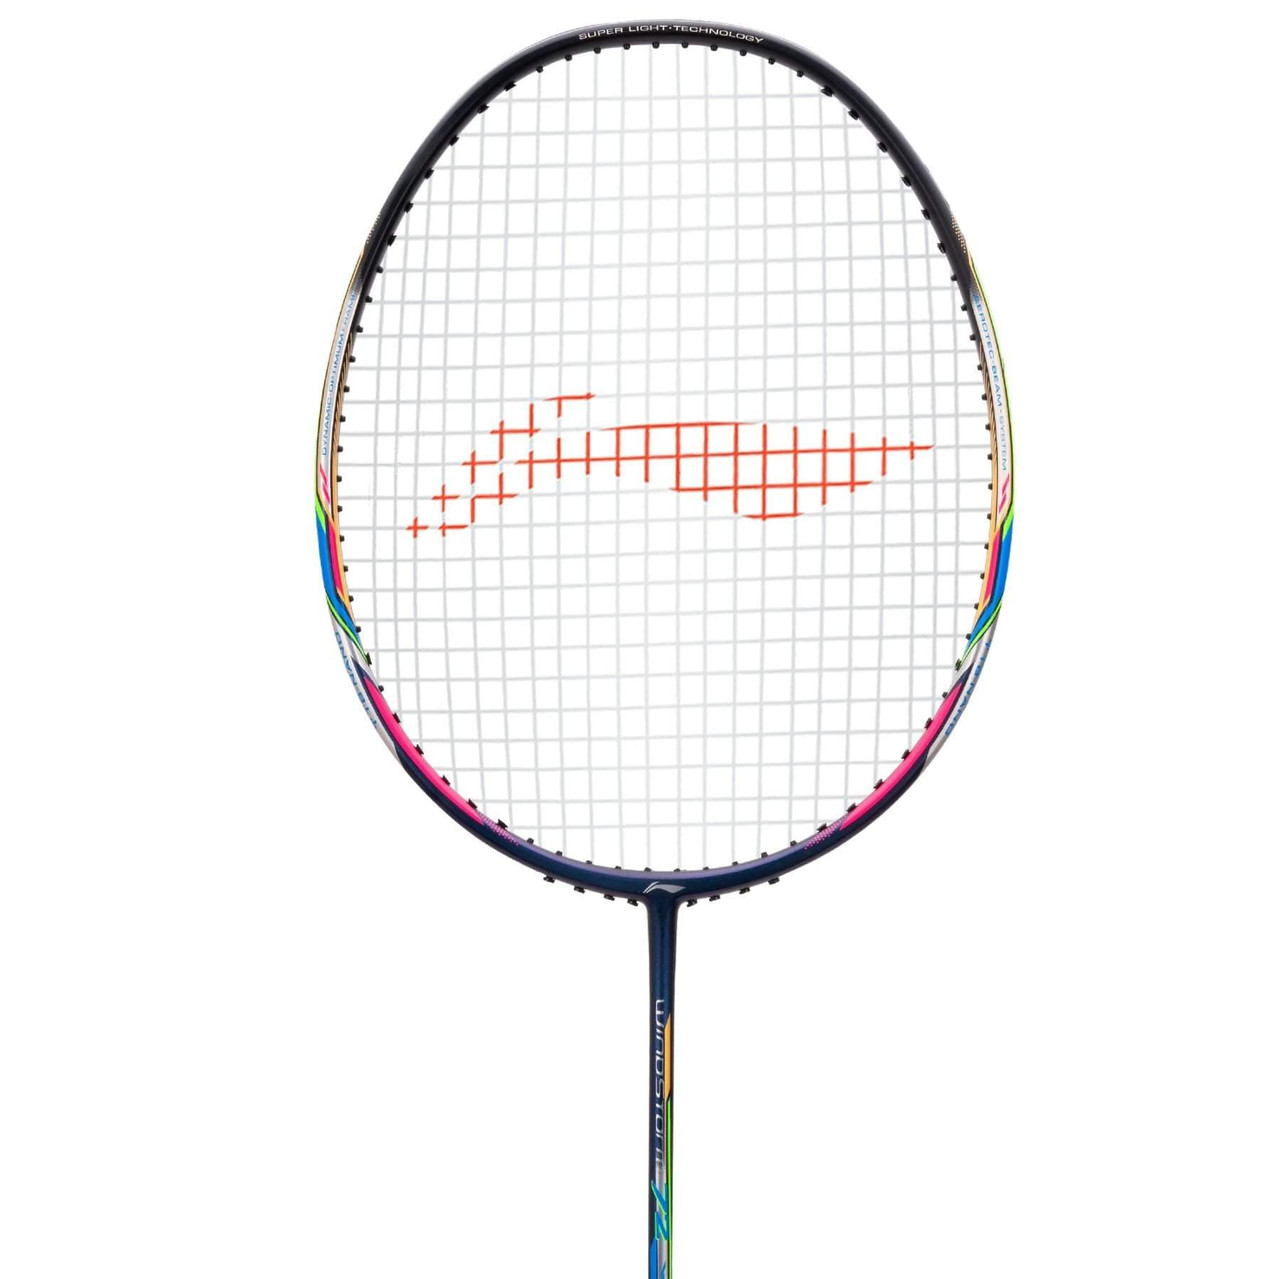 LI-NING WINDSTORM 72 NAVY/BLACK/PINK - FREE GRIP - Badminton Supplies S.A.